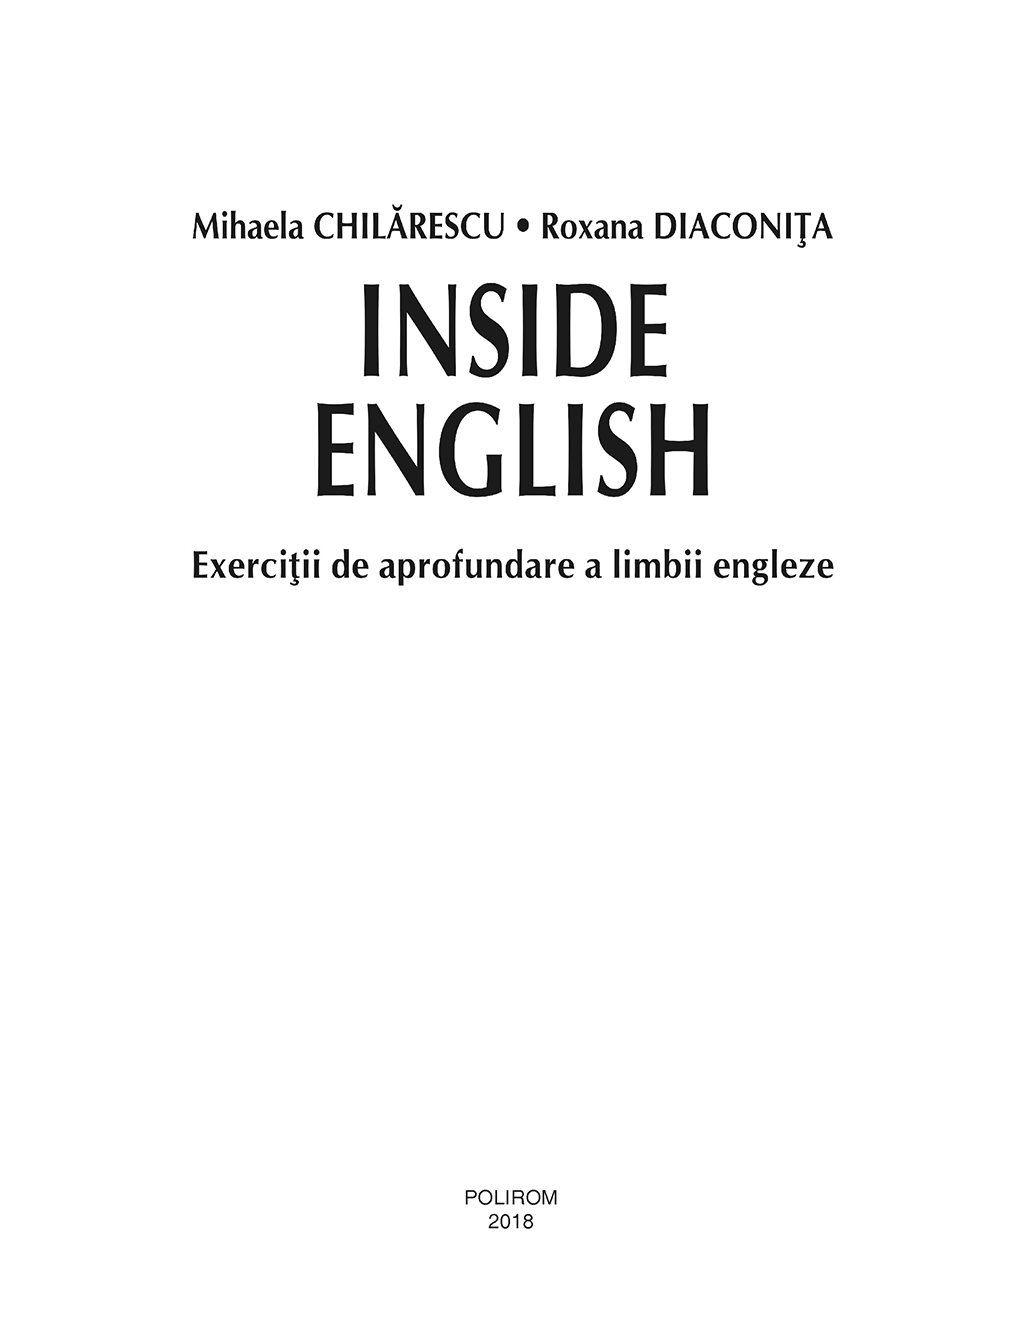 Inside English | Mihaela Chilarescu, Roxana Diaconita